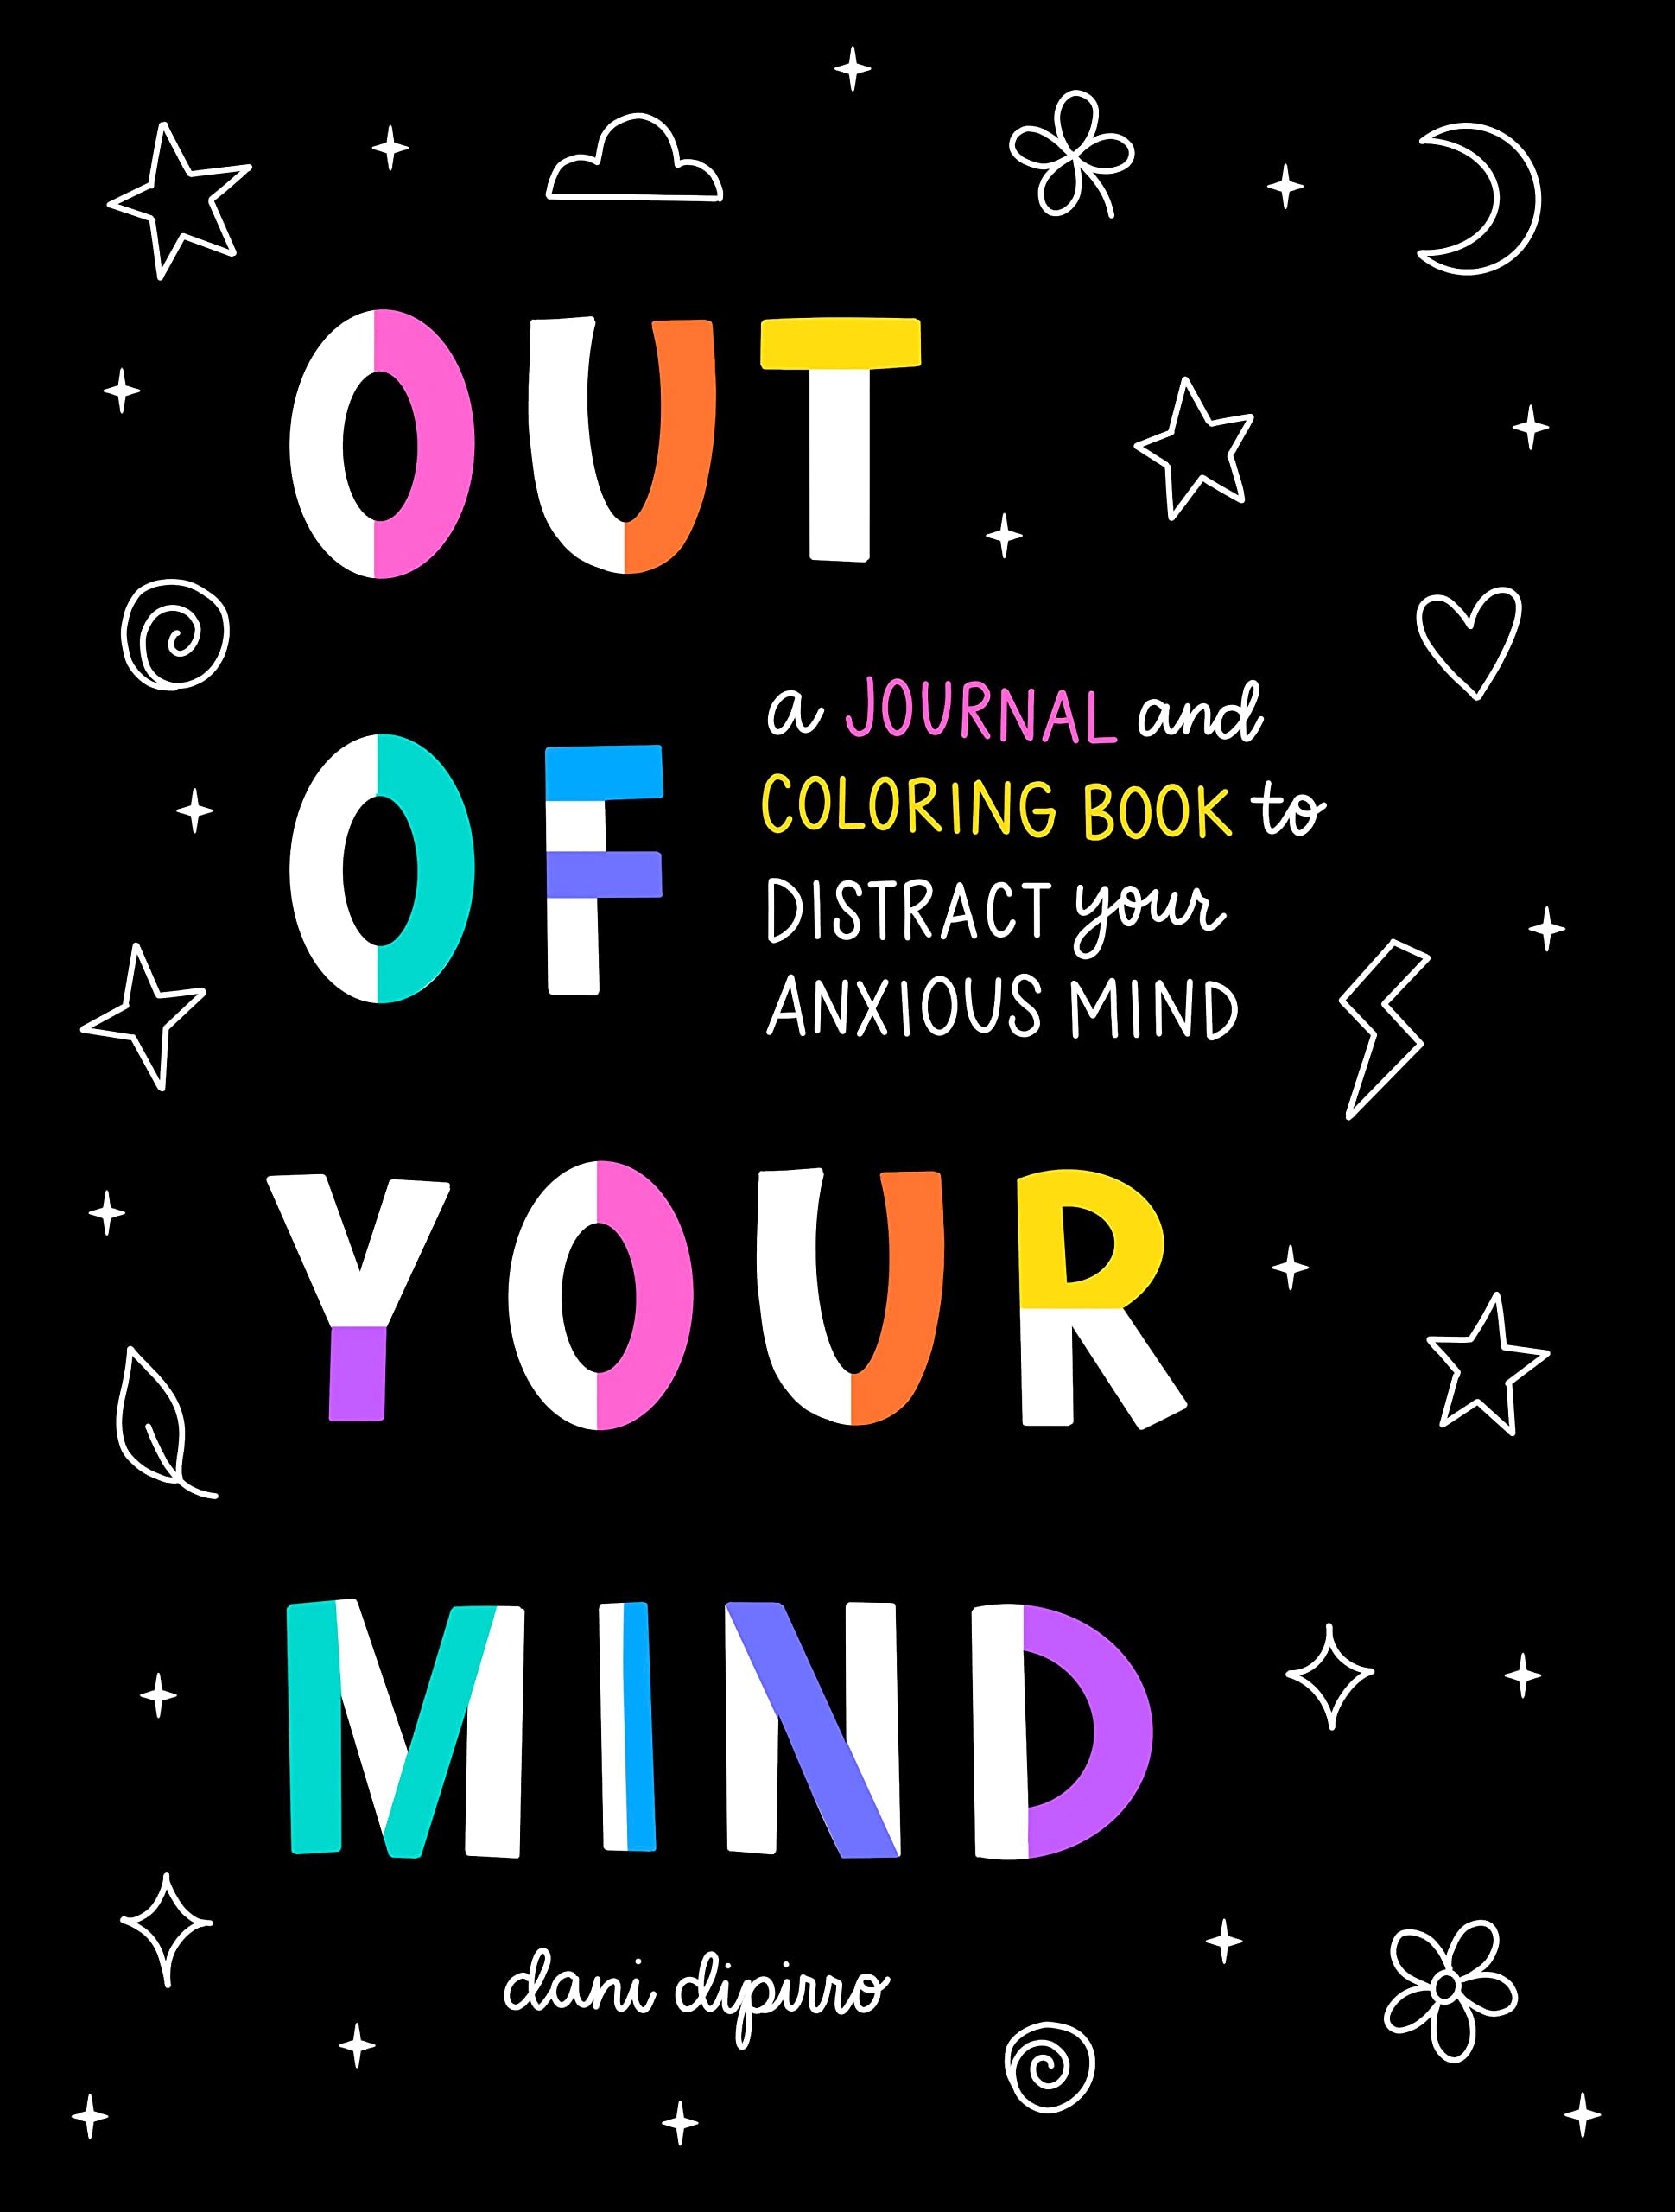 https://www.weareteachers.com/wp-content/uploads/Out-of-Your-Mind-Coloring-Book-Journal.jpg